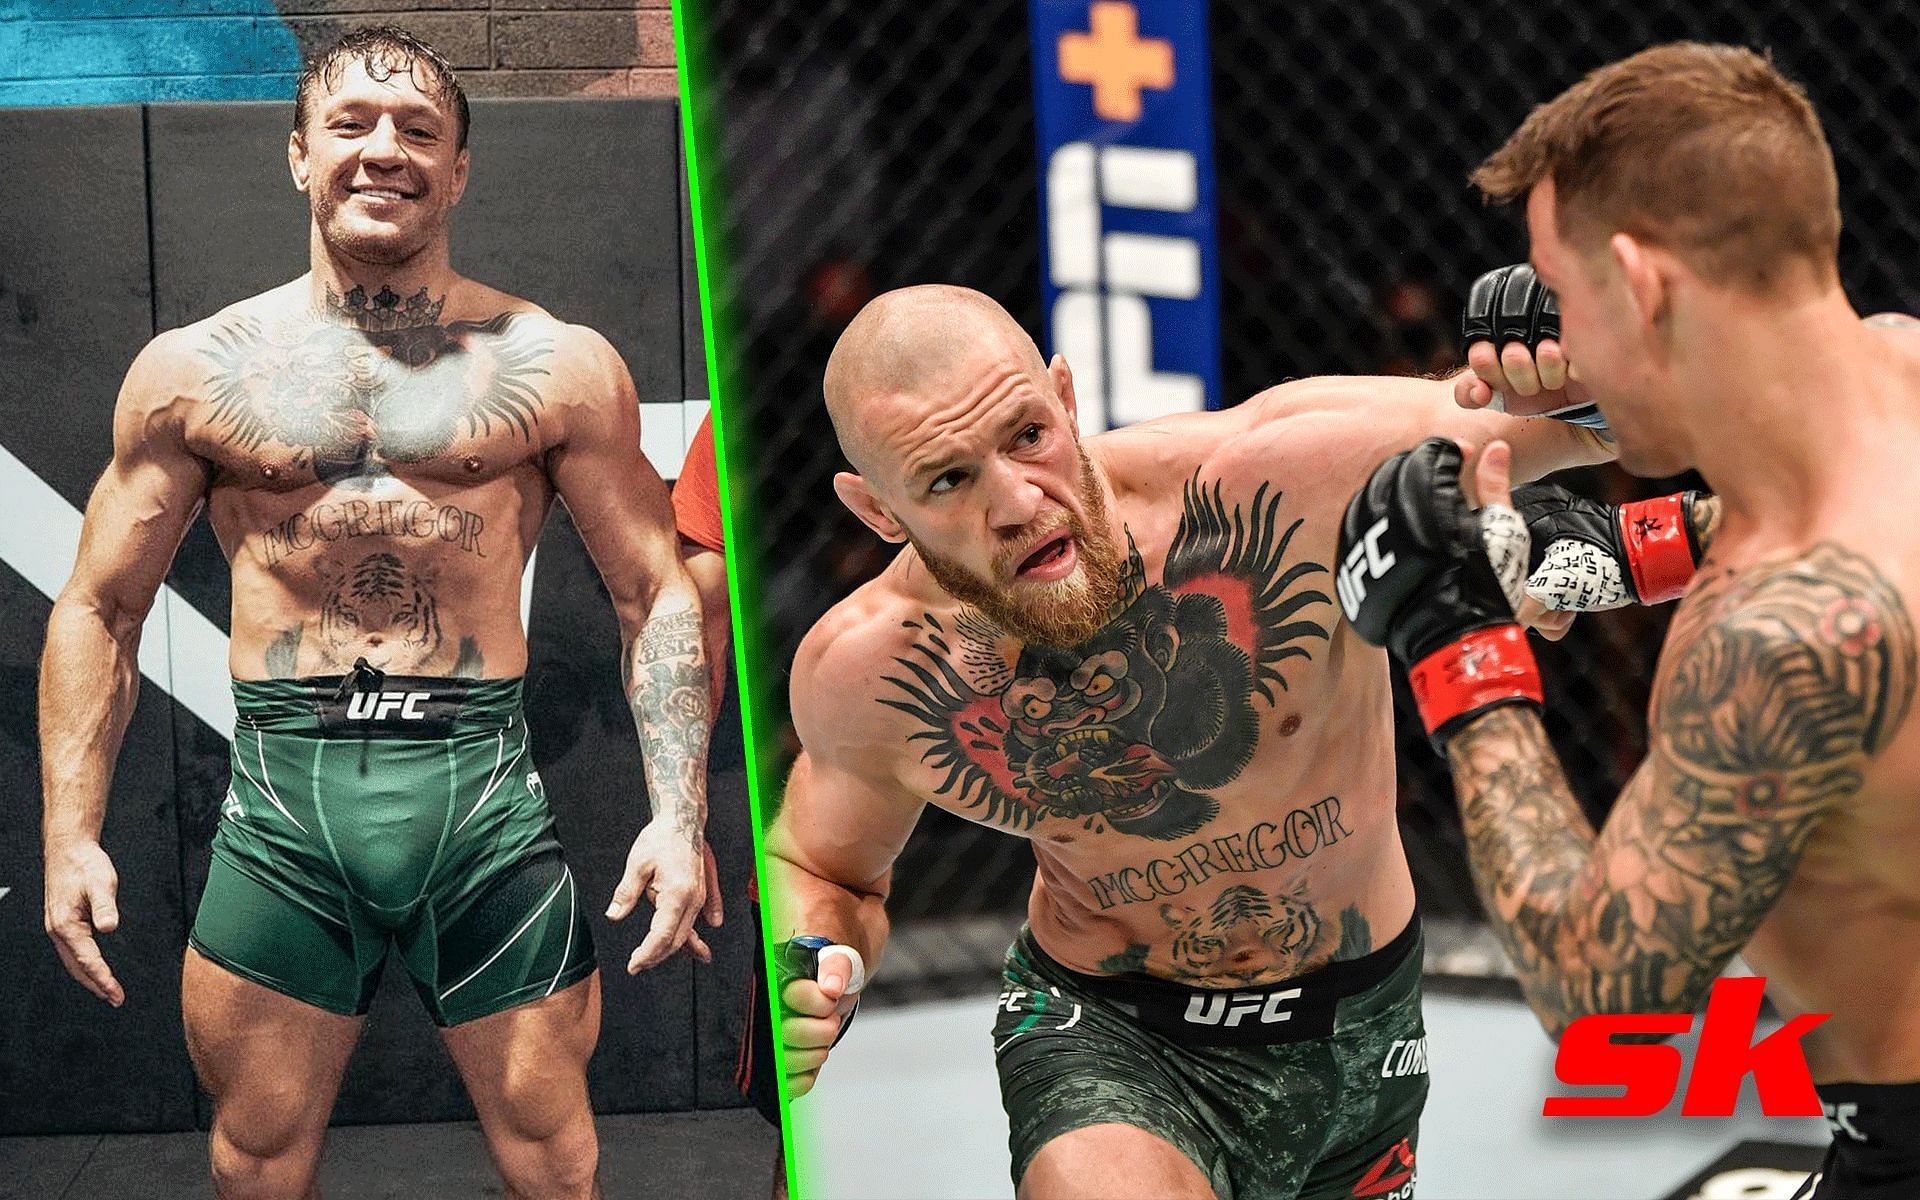 Fans debate impact of Conor McGregor's recent weight gain on his UFC career